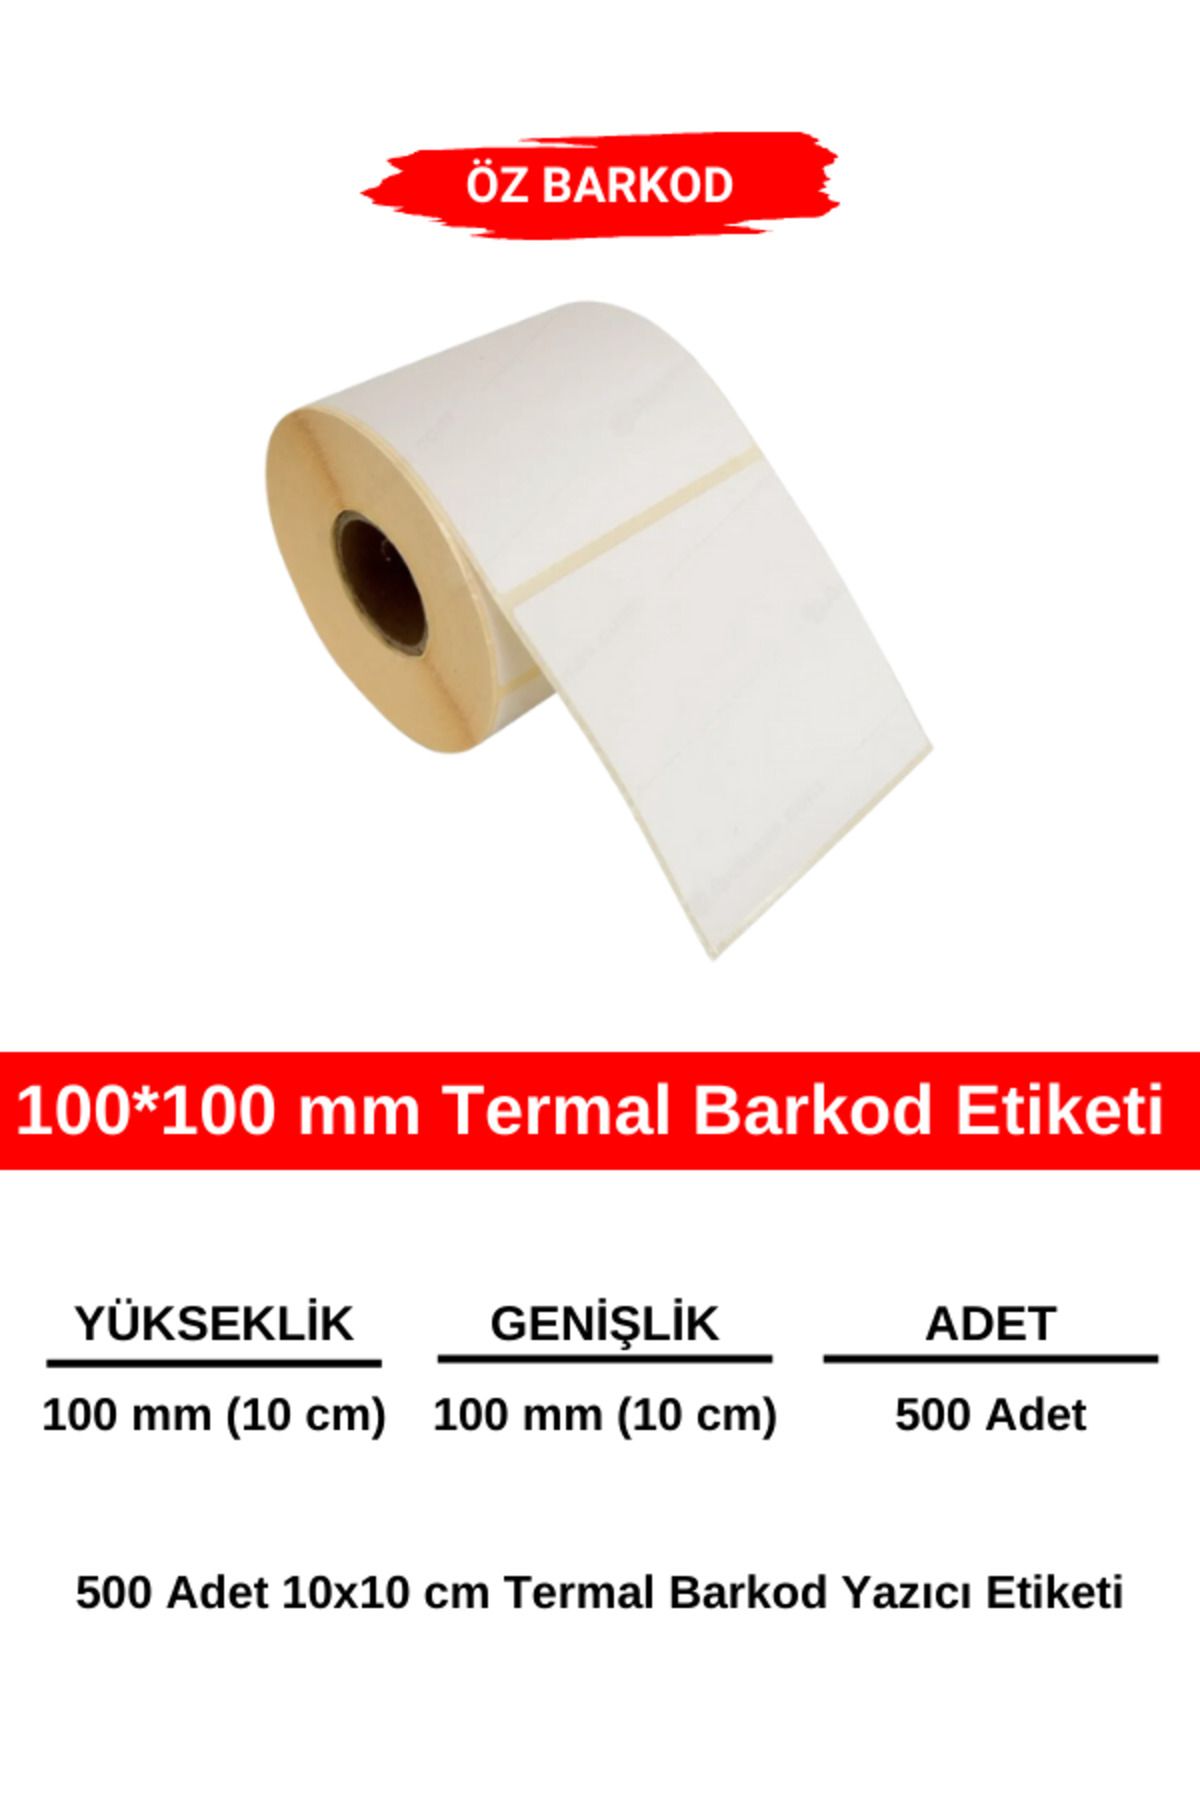 ÖZ BARKOD 100*100 mm Barkod Etiketi - 500 Adet Termal Etiket